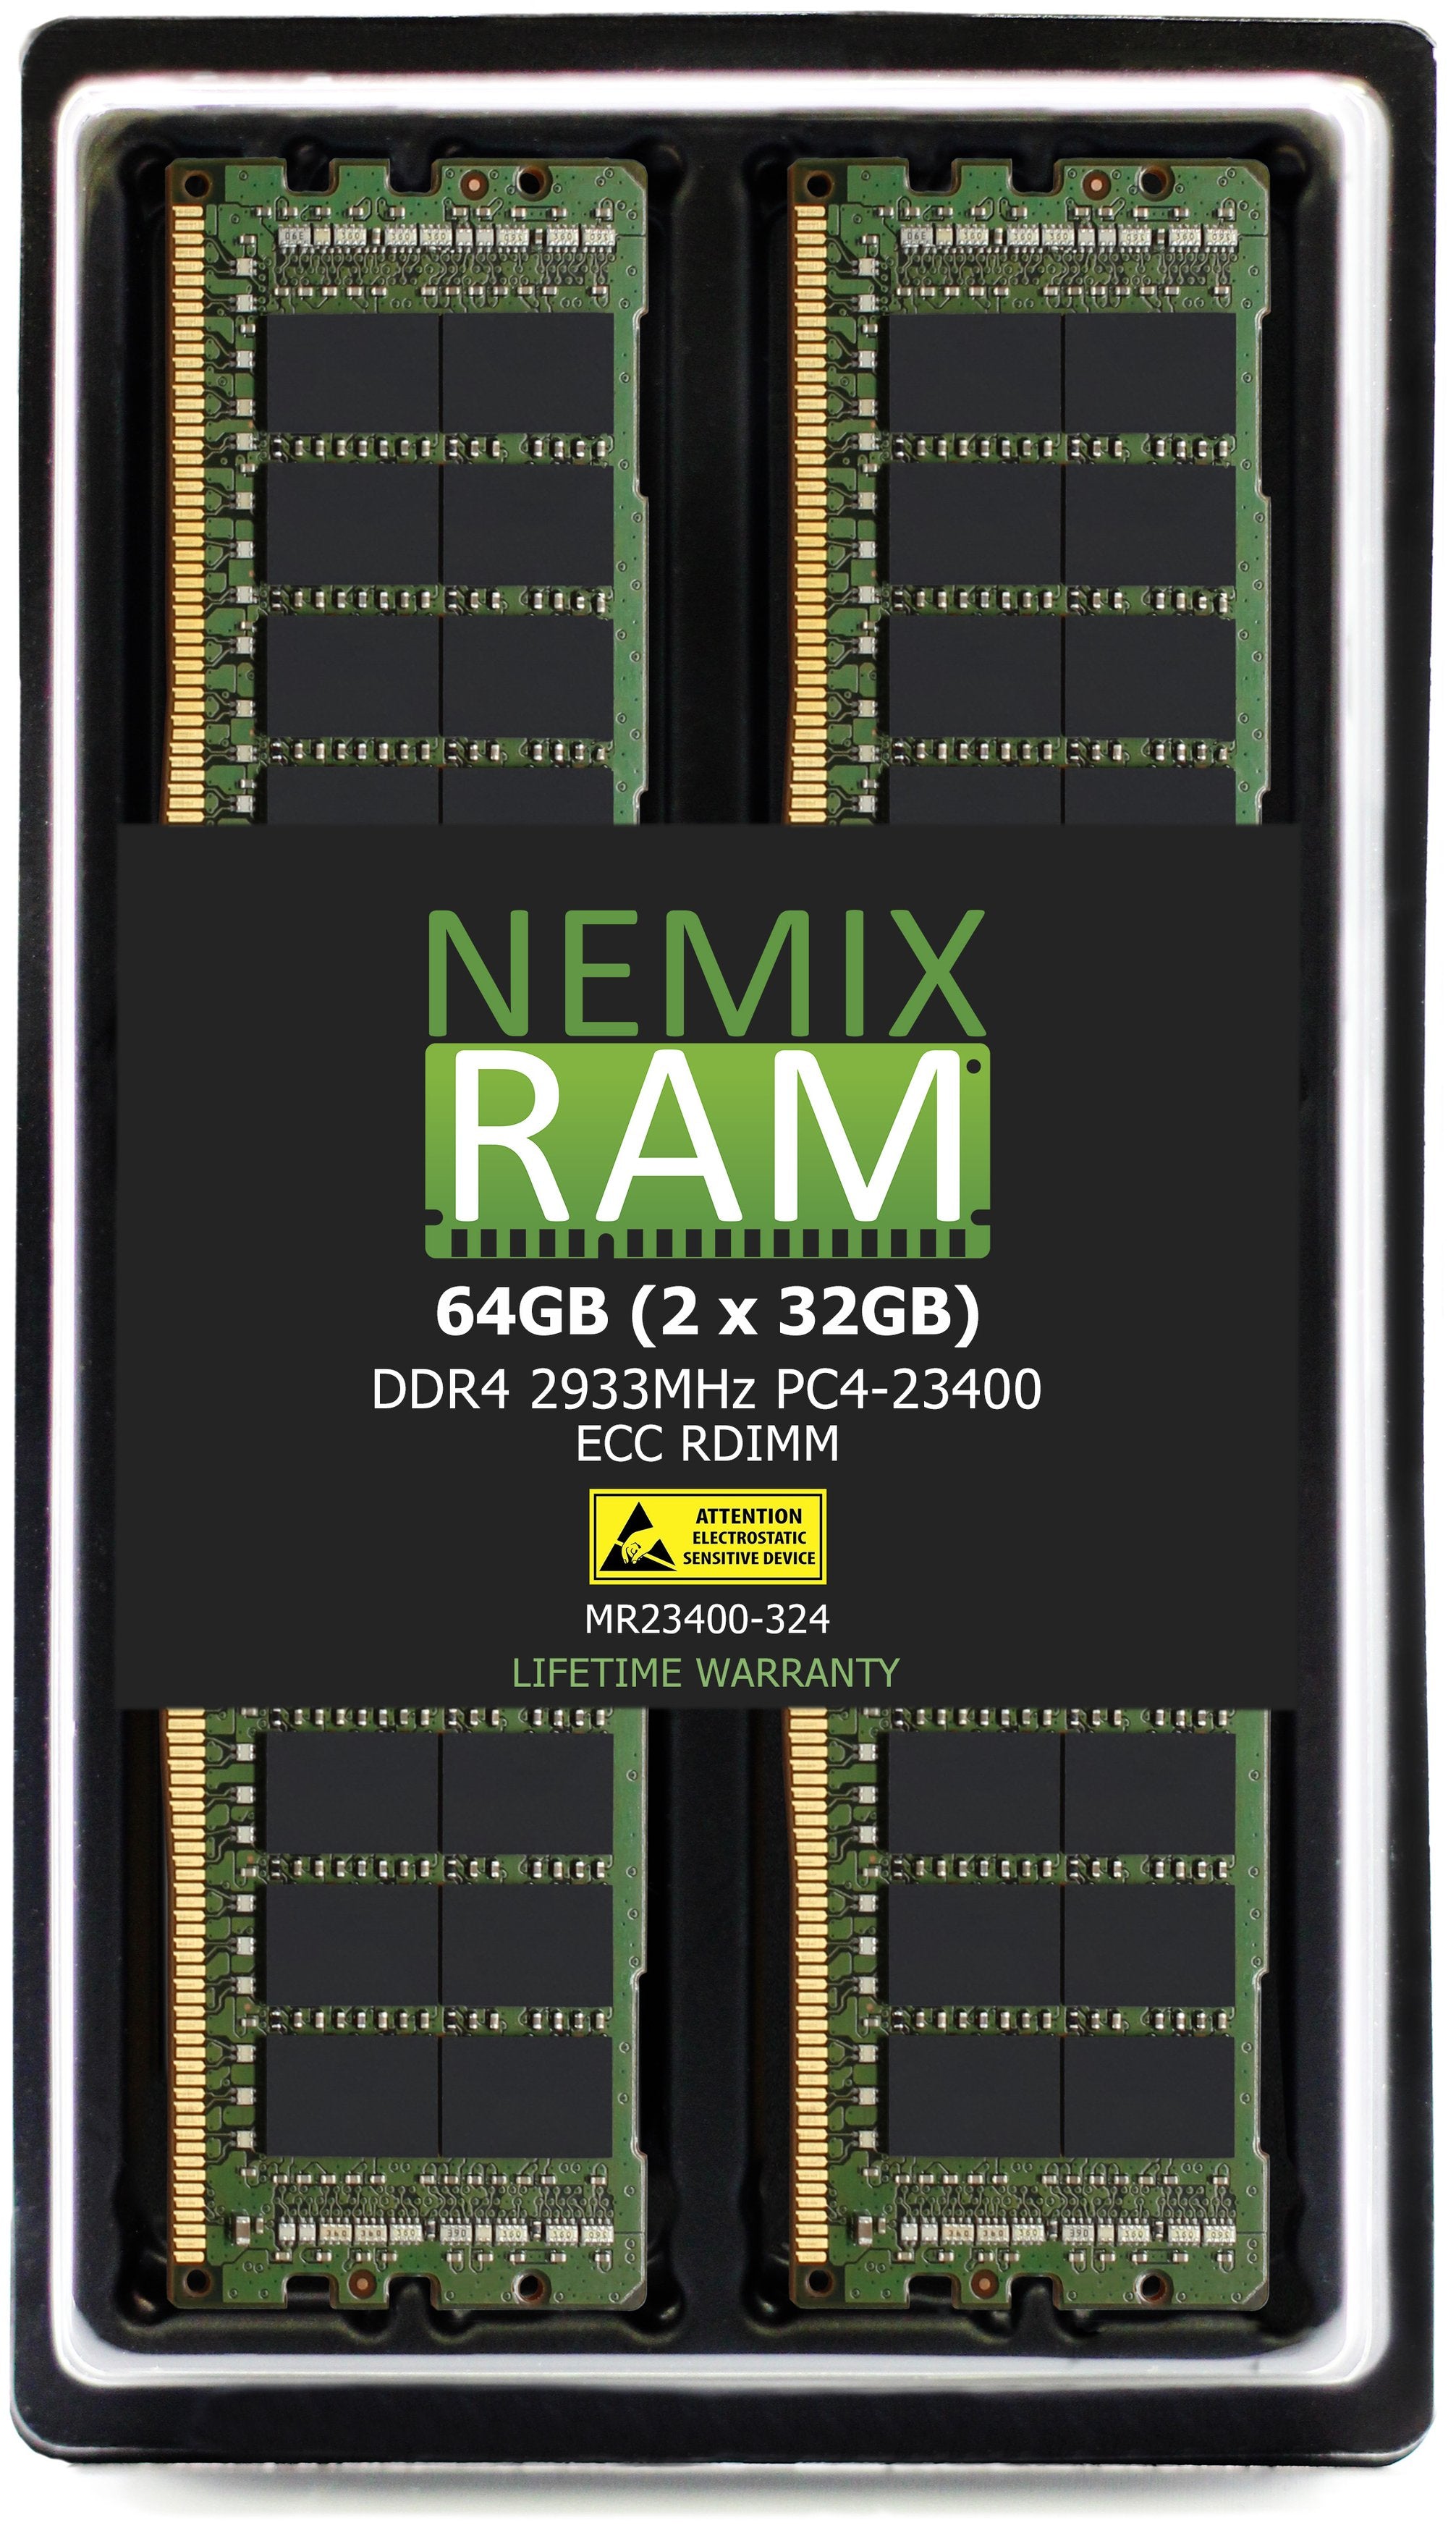 DDR4 2933MHZ PC4-23400 RDIMM 2RX4